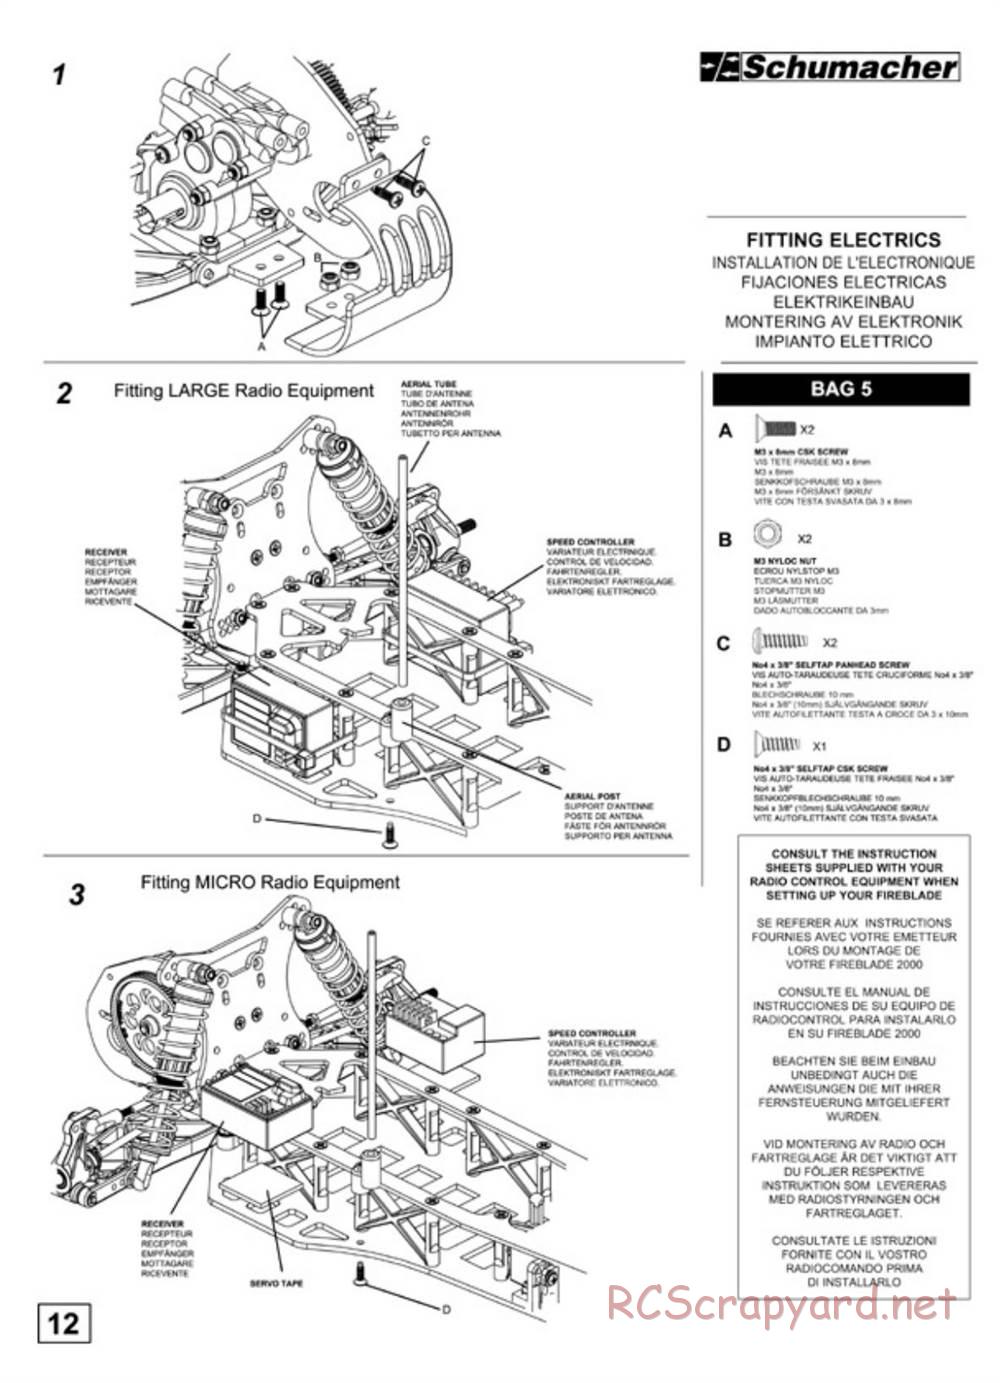 Schumacher - Fireblade Evo - Manual - Page 14